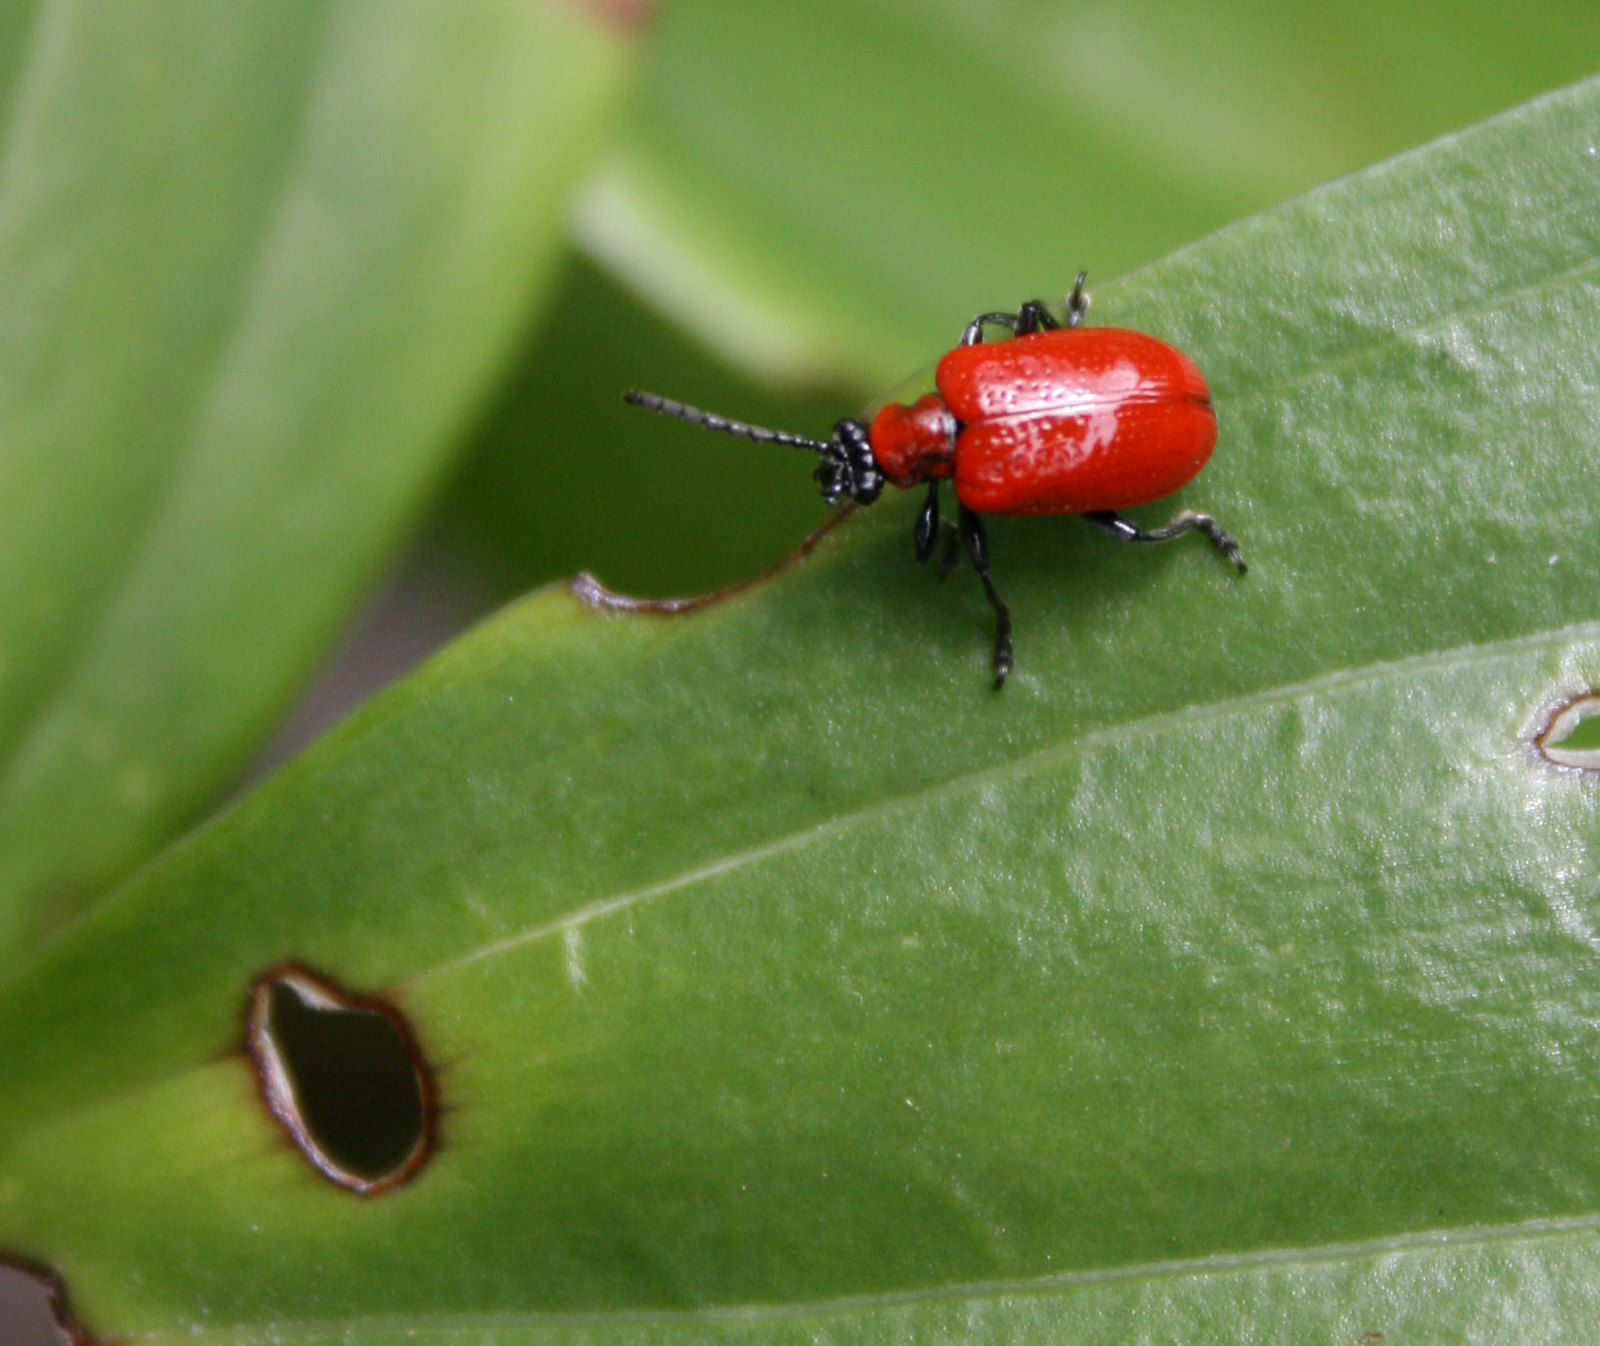 Search & Destroy: Scarlet Lily Beetles